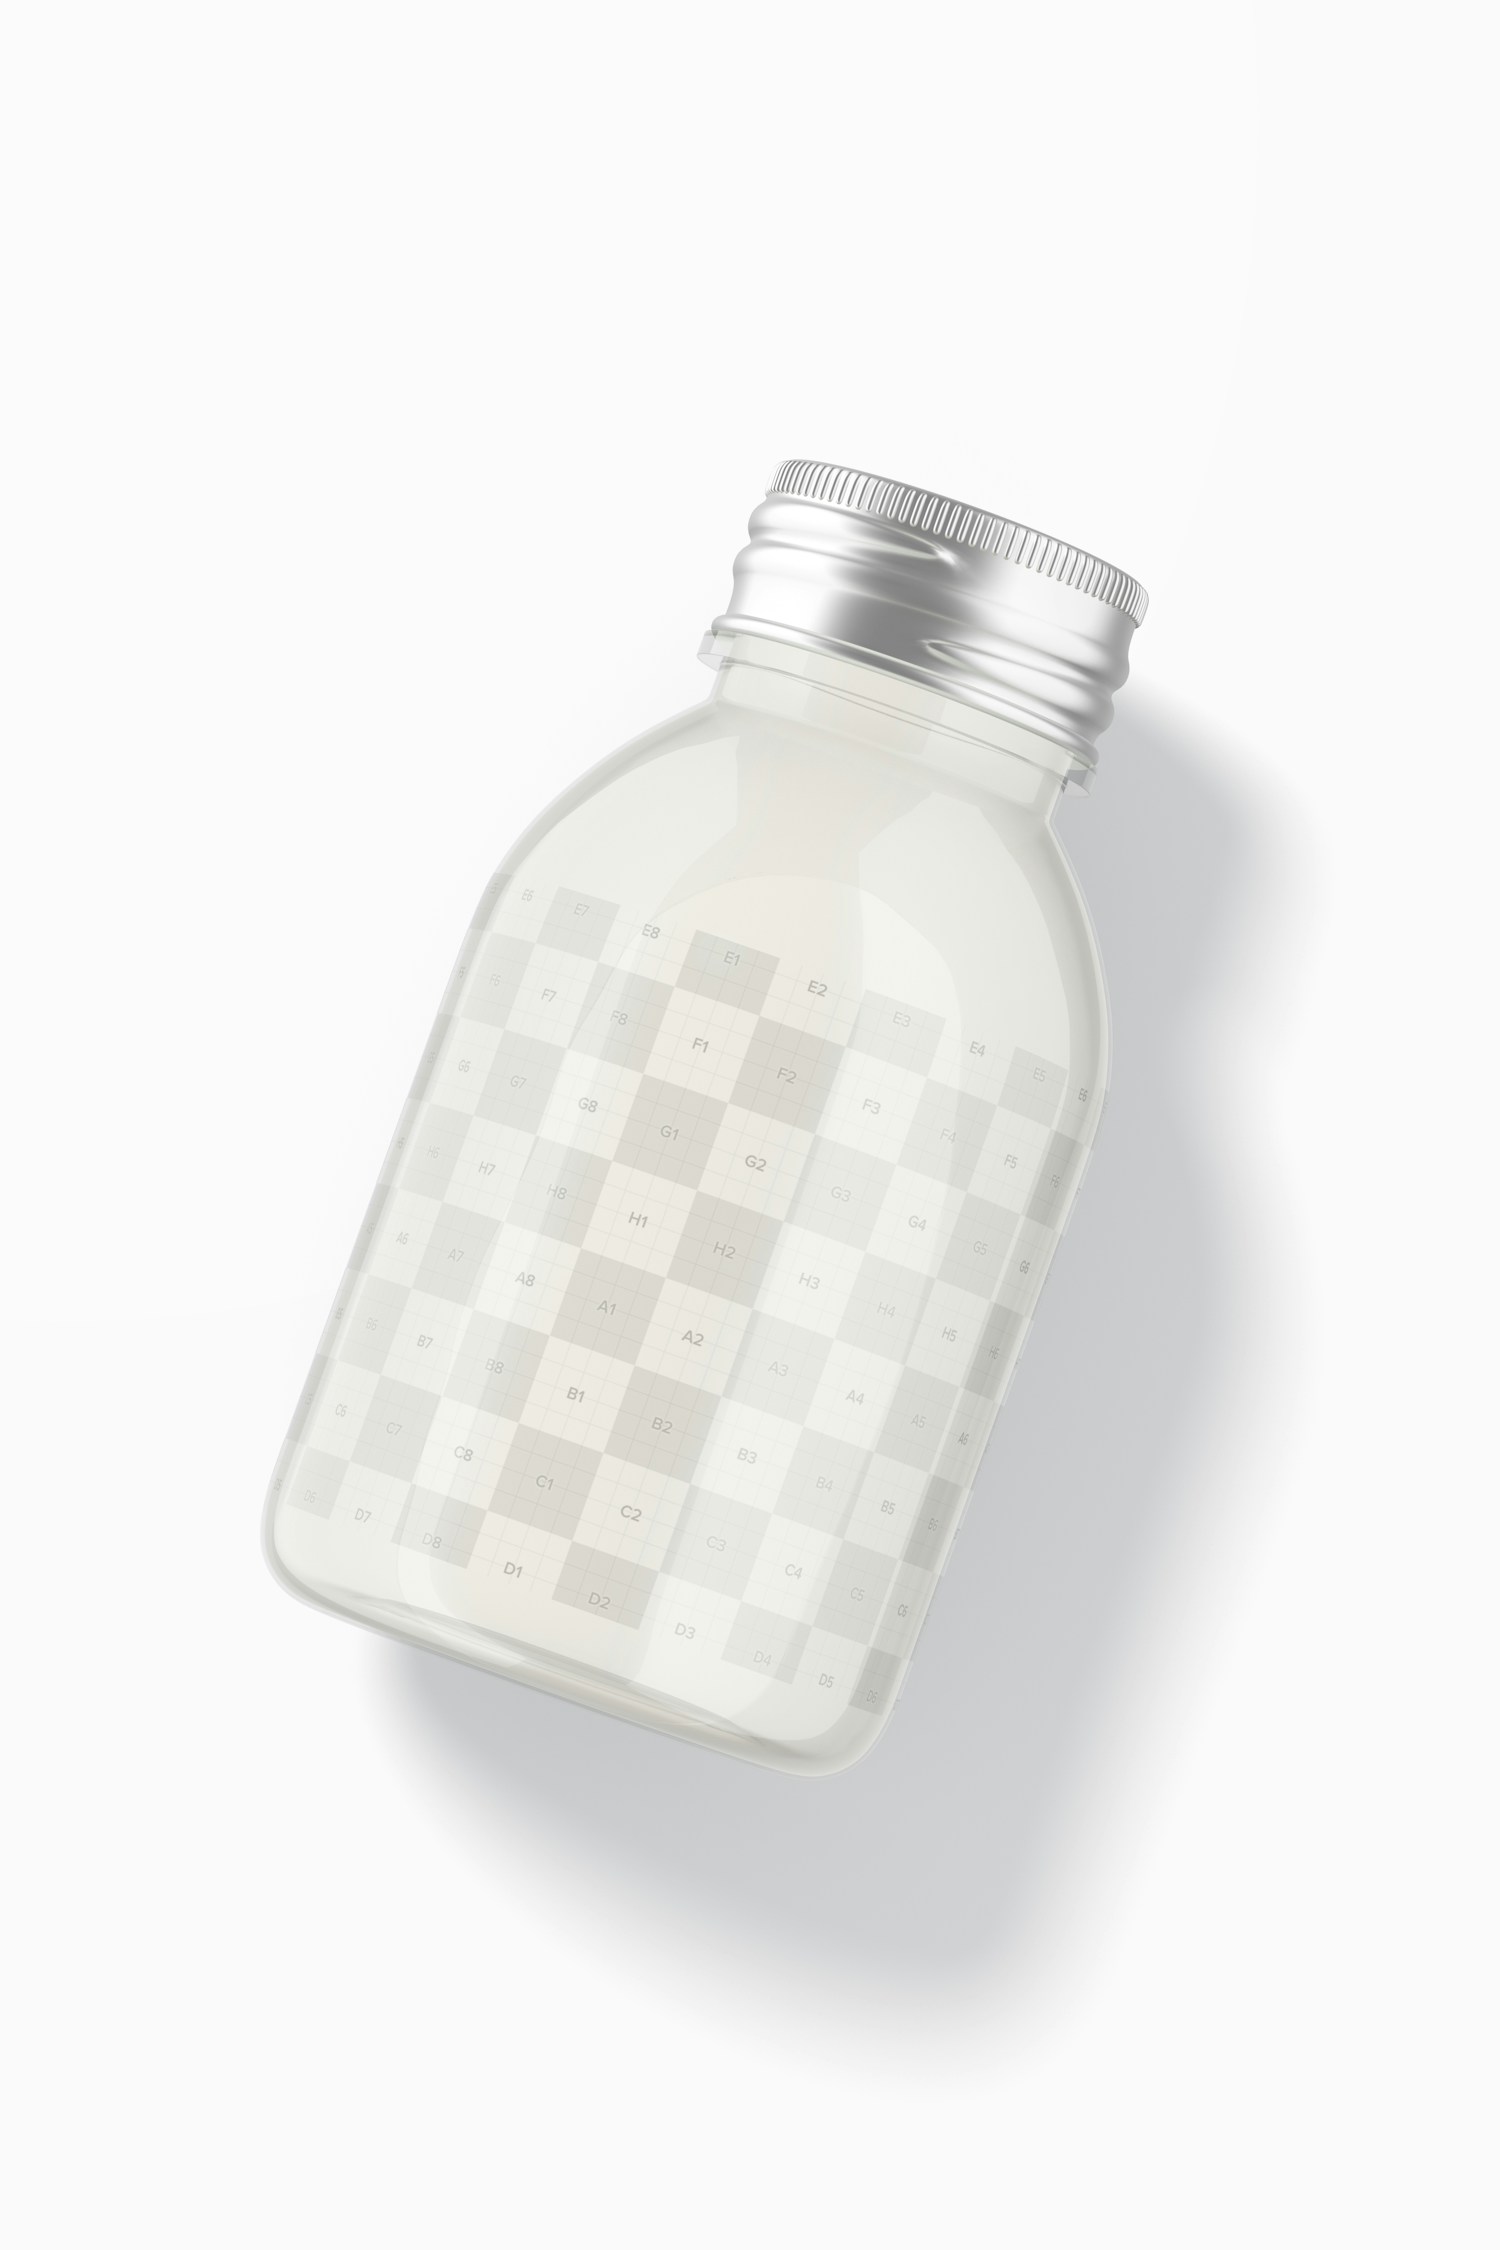 Plastic Milk Bottles Mockup, Top View